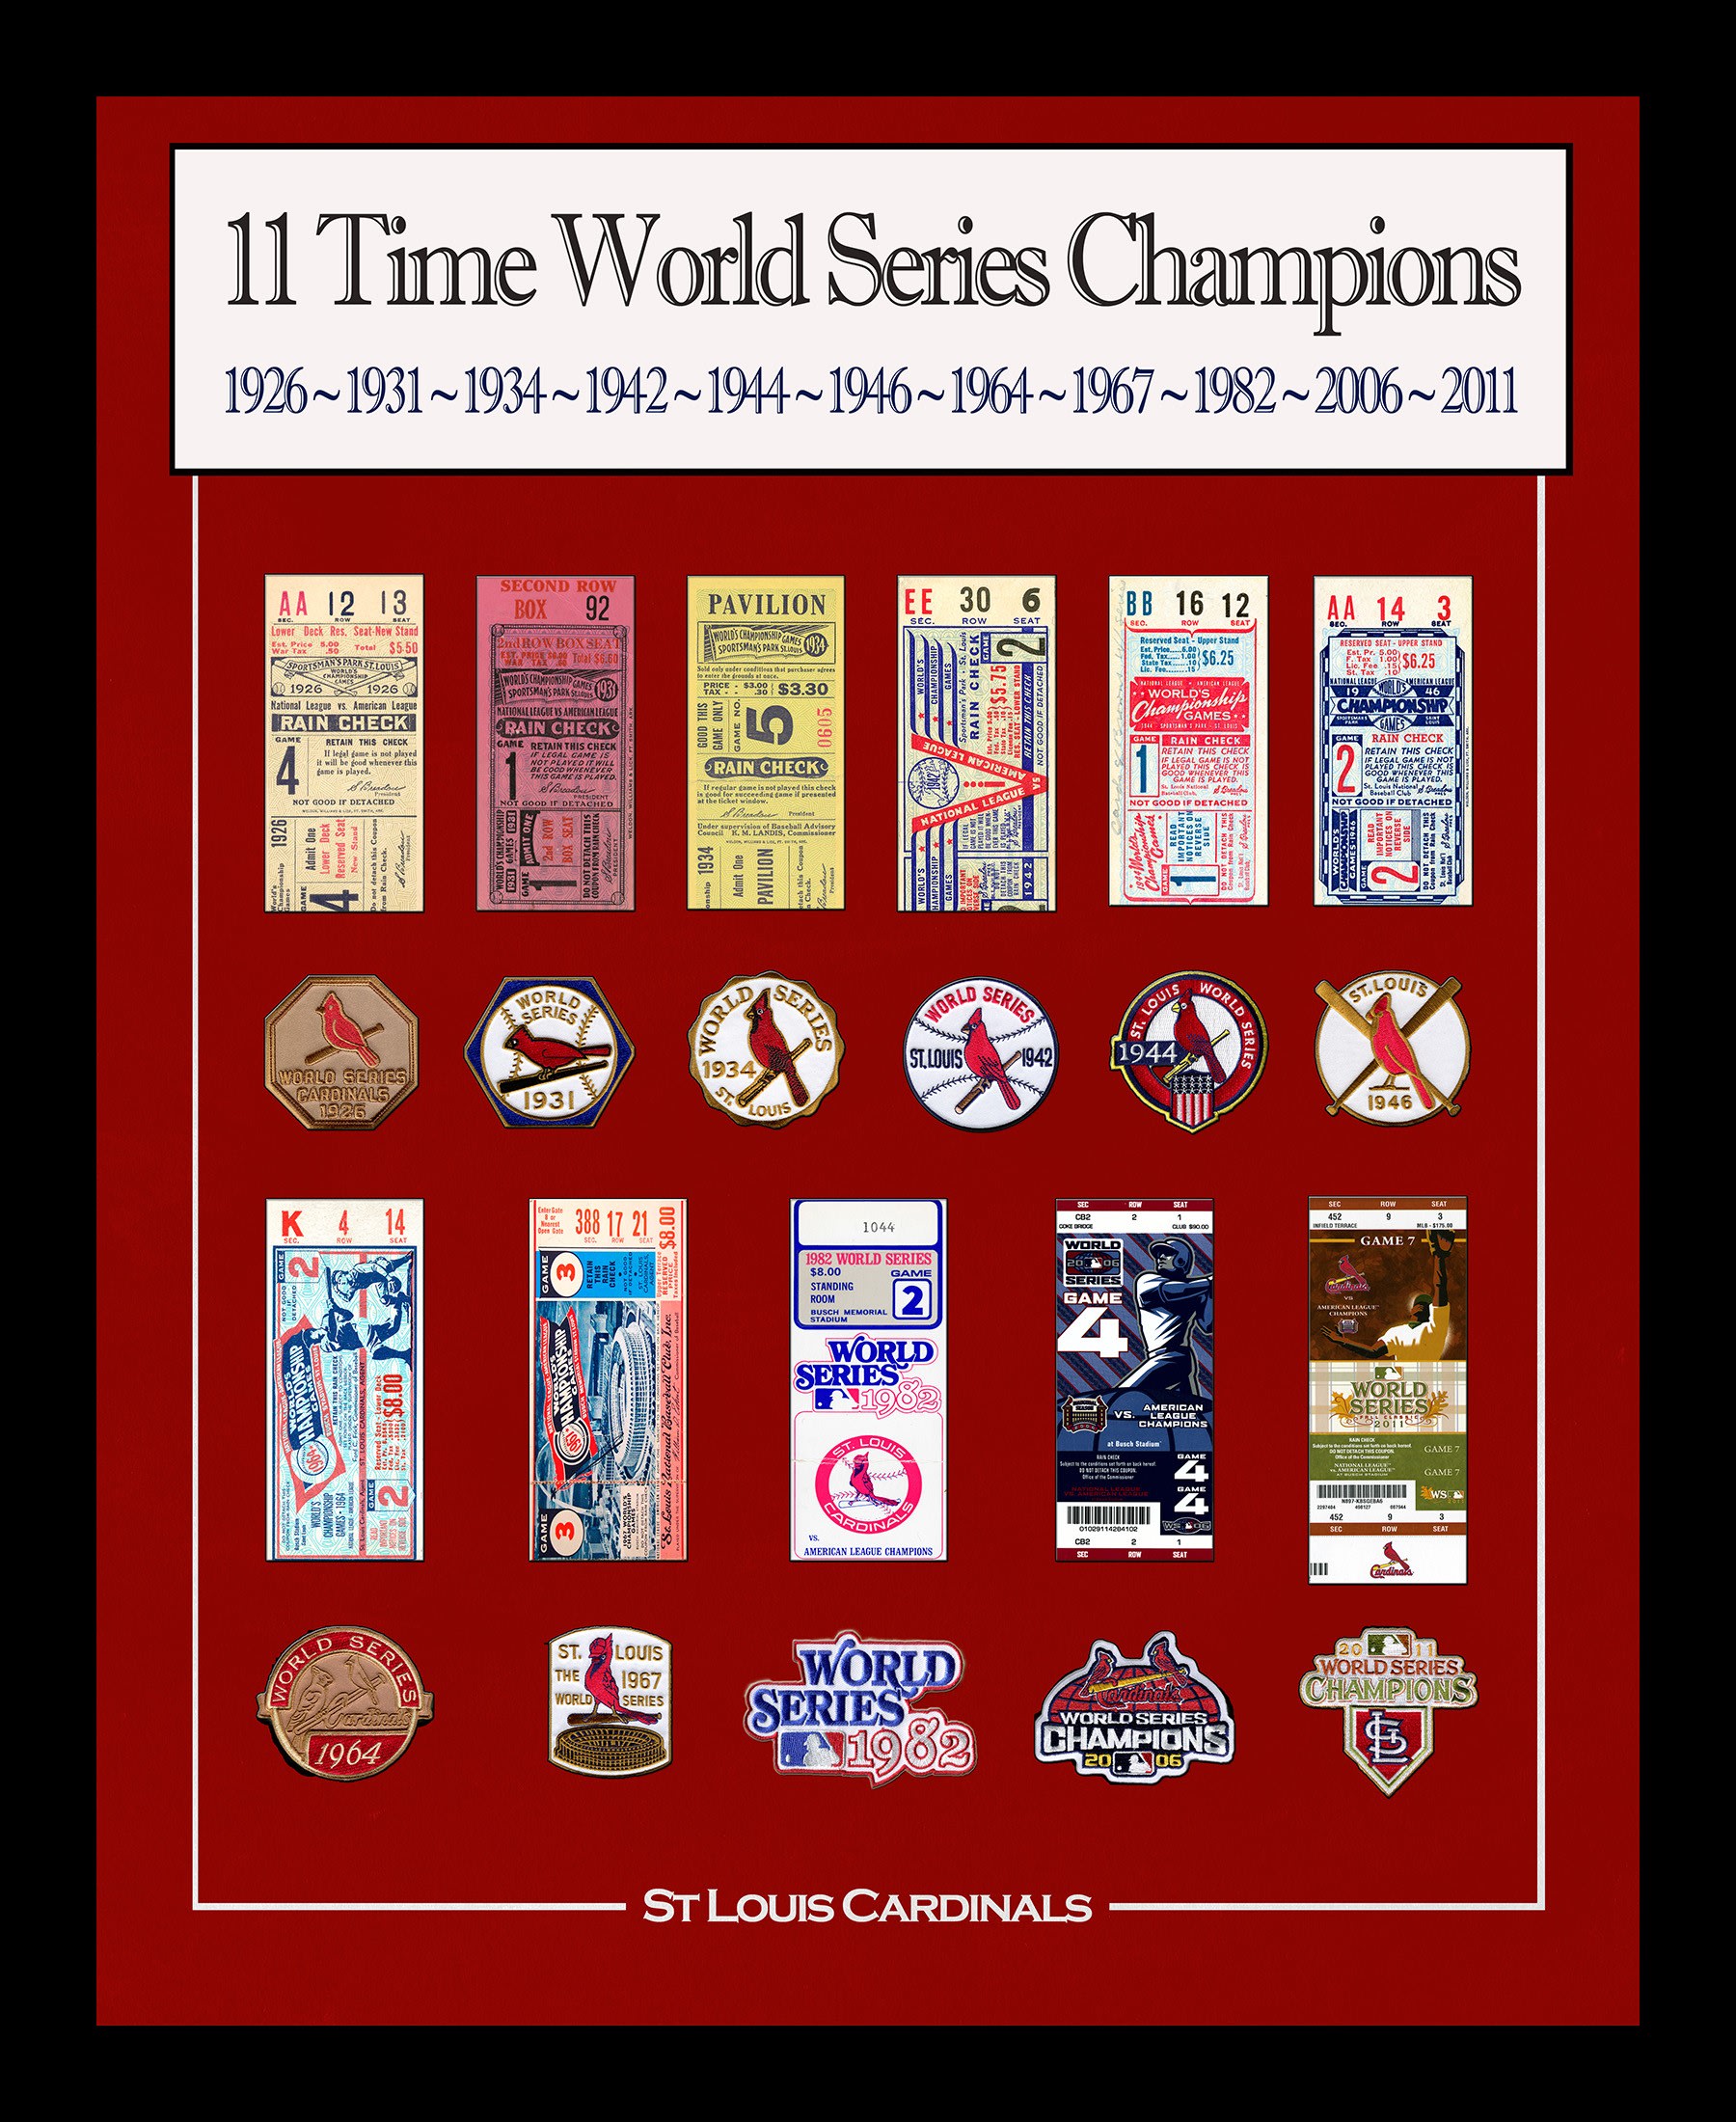 2015 Cardinals 1982 World Series Replica Ring